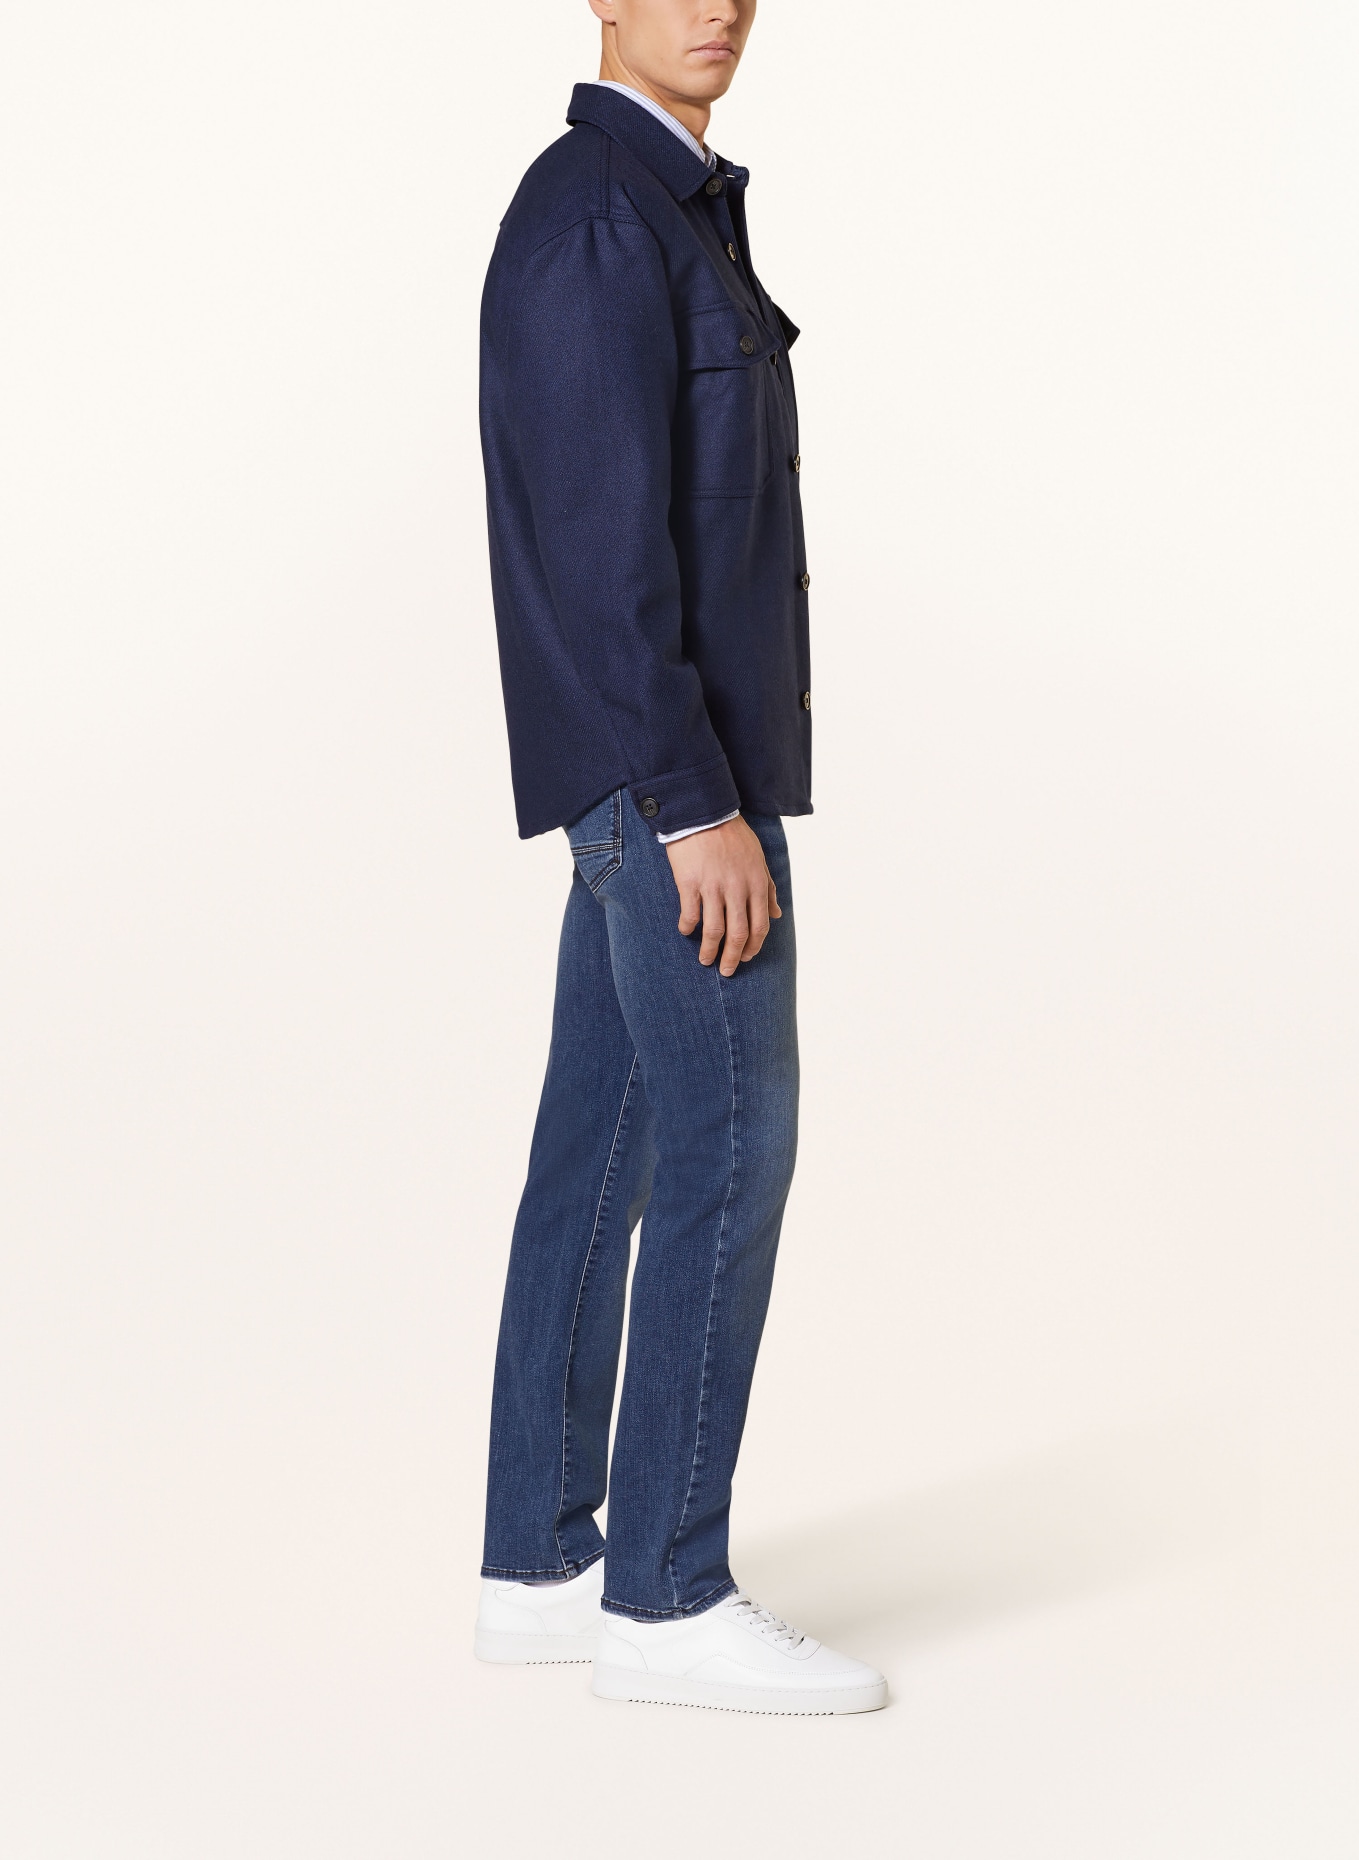 pierre cardin Jeans ANTIBES Slim Fit, Farbe: 6835 ocean blue used whisker (Bild 4)